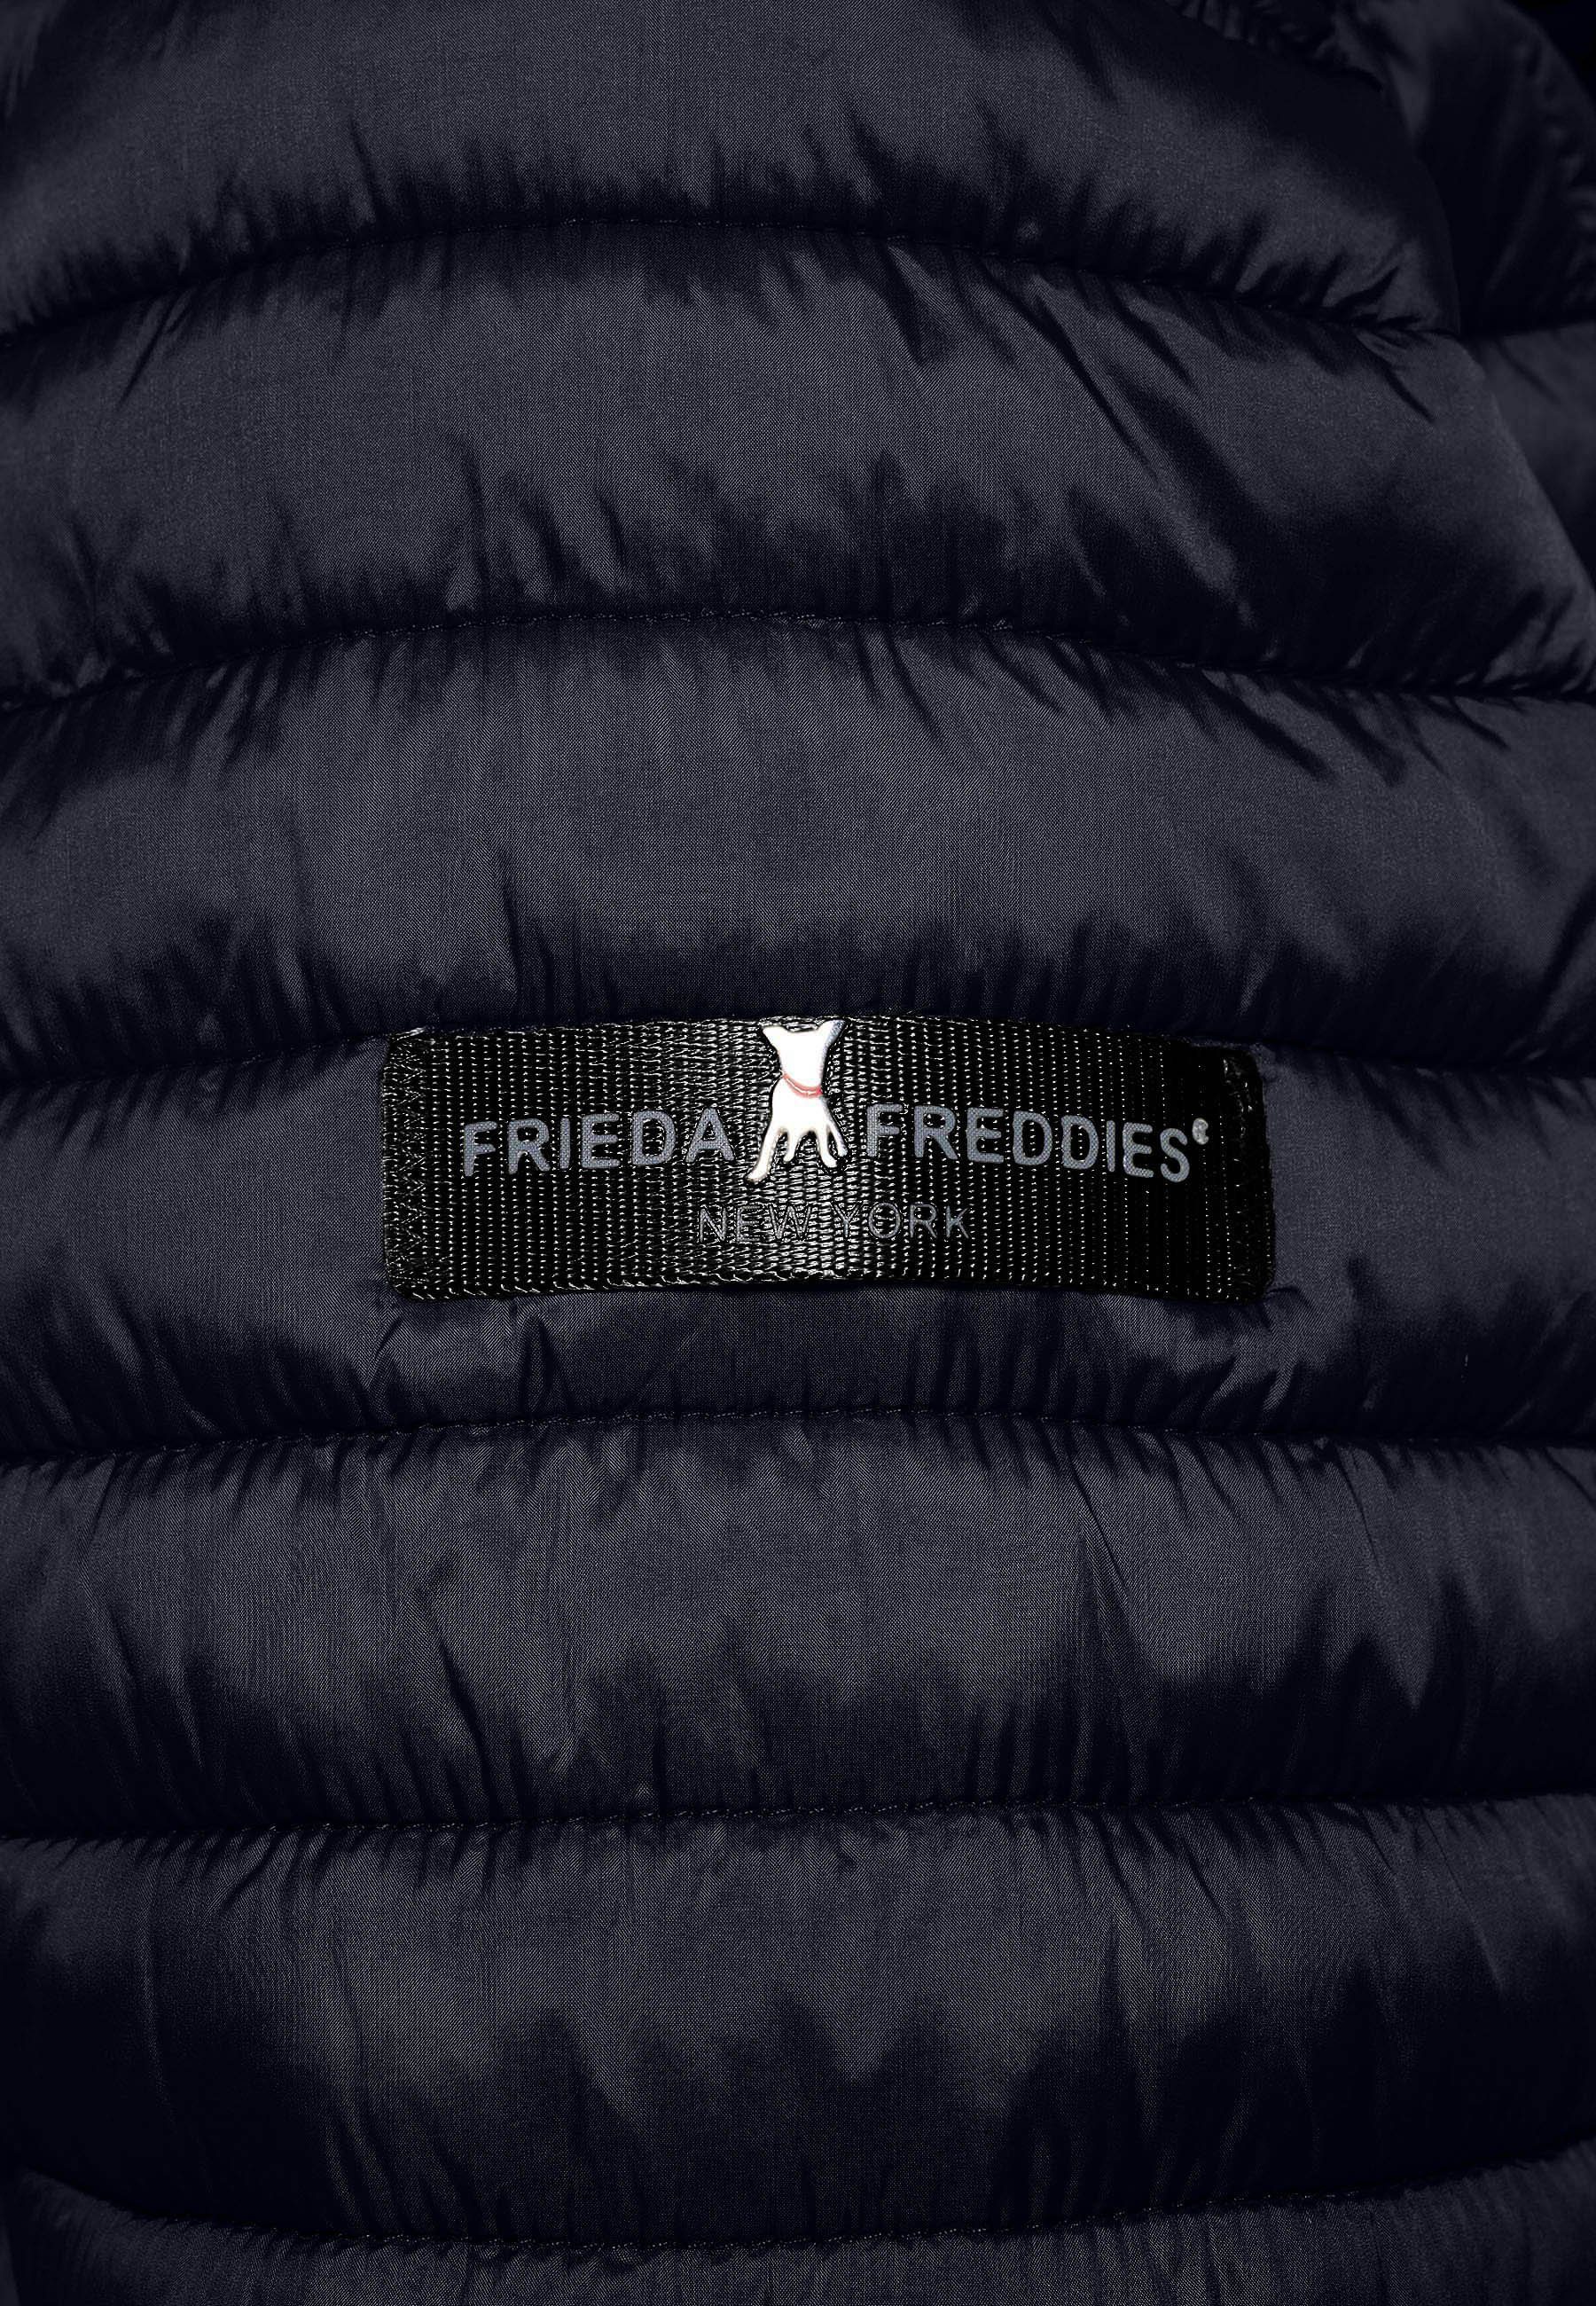 Winterjacke NY Jacket, Down Fake Friday dunkelblau Frieda Freddies &